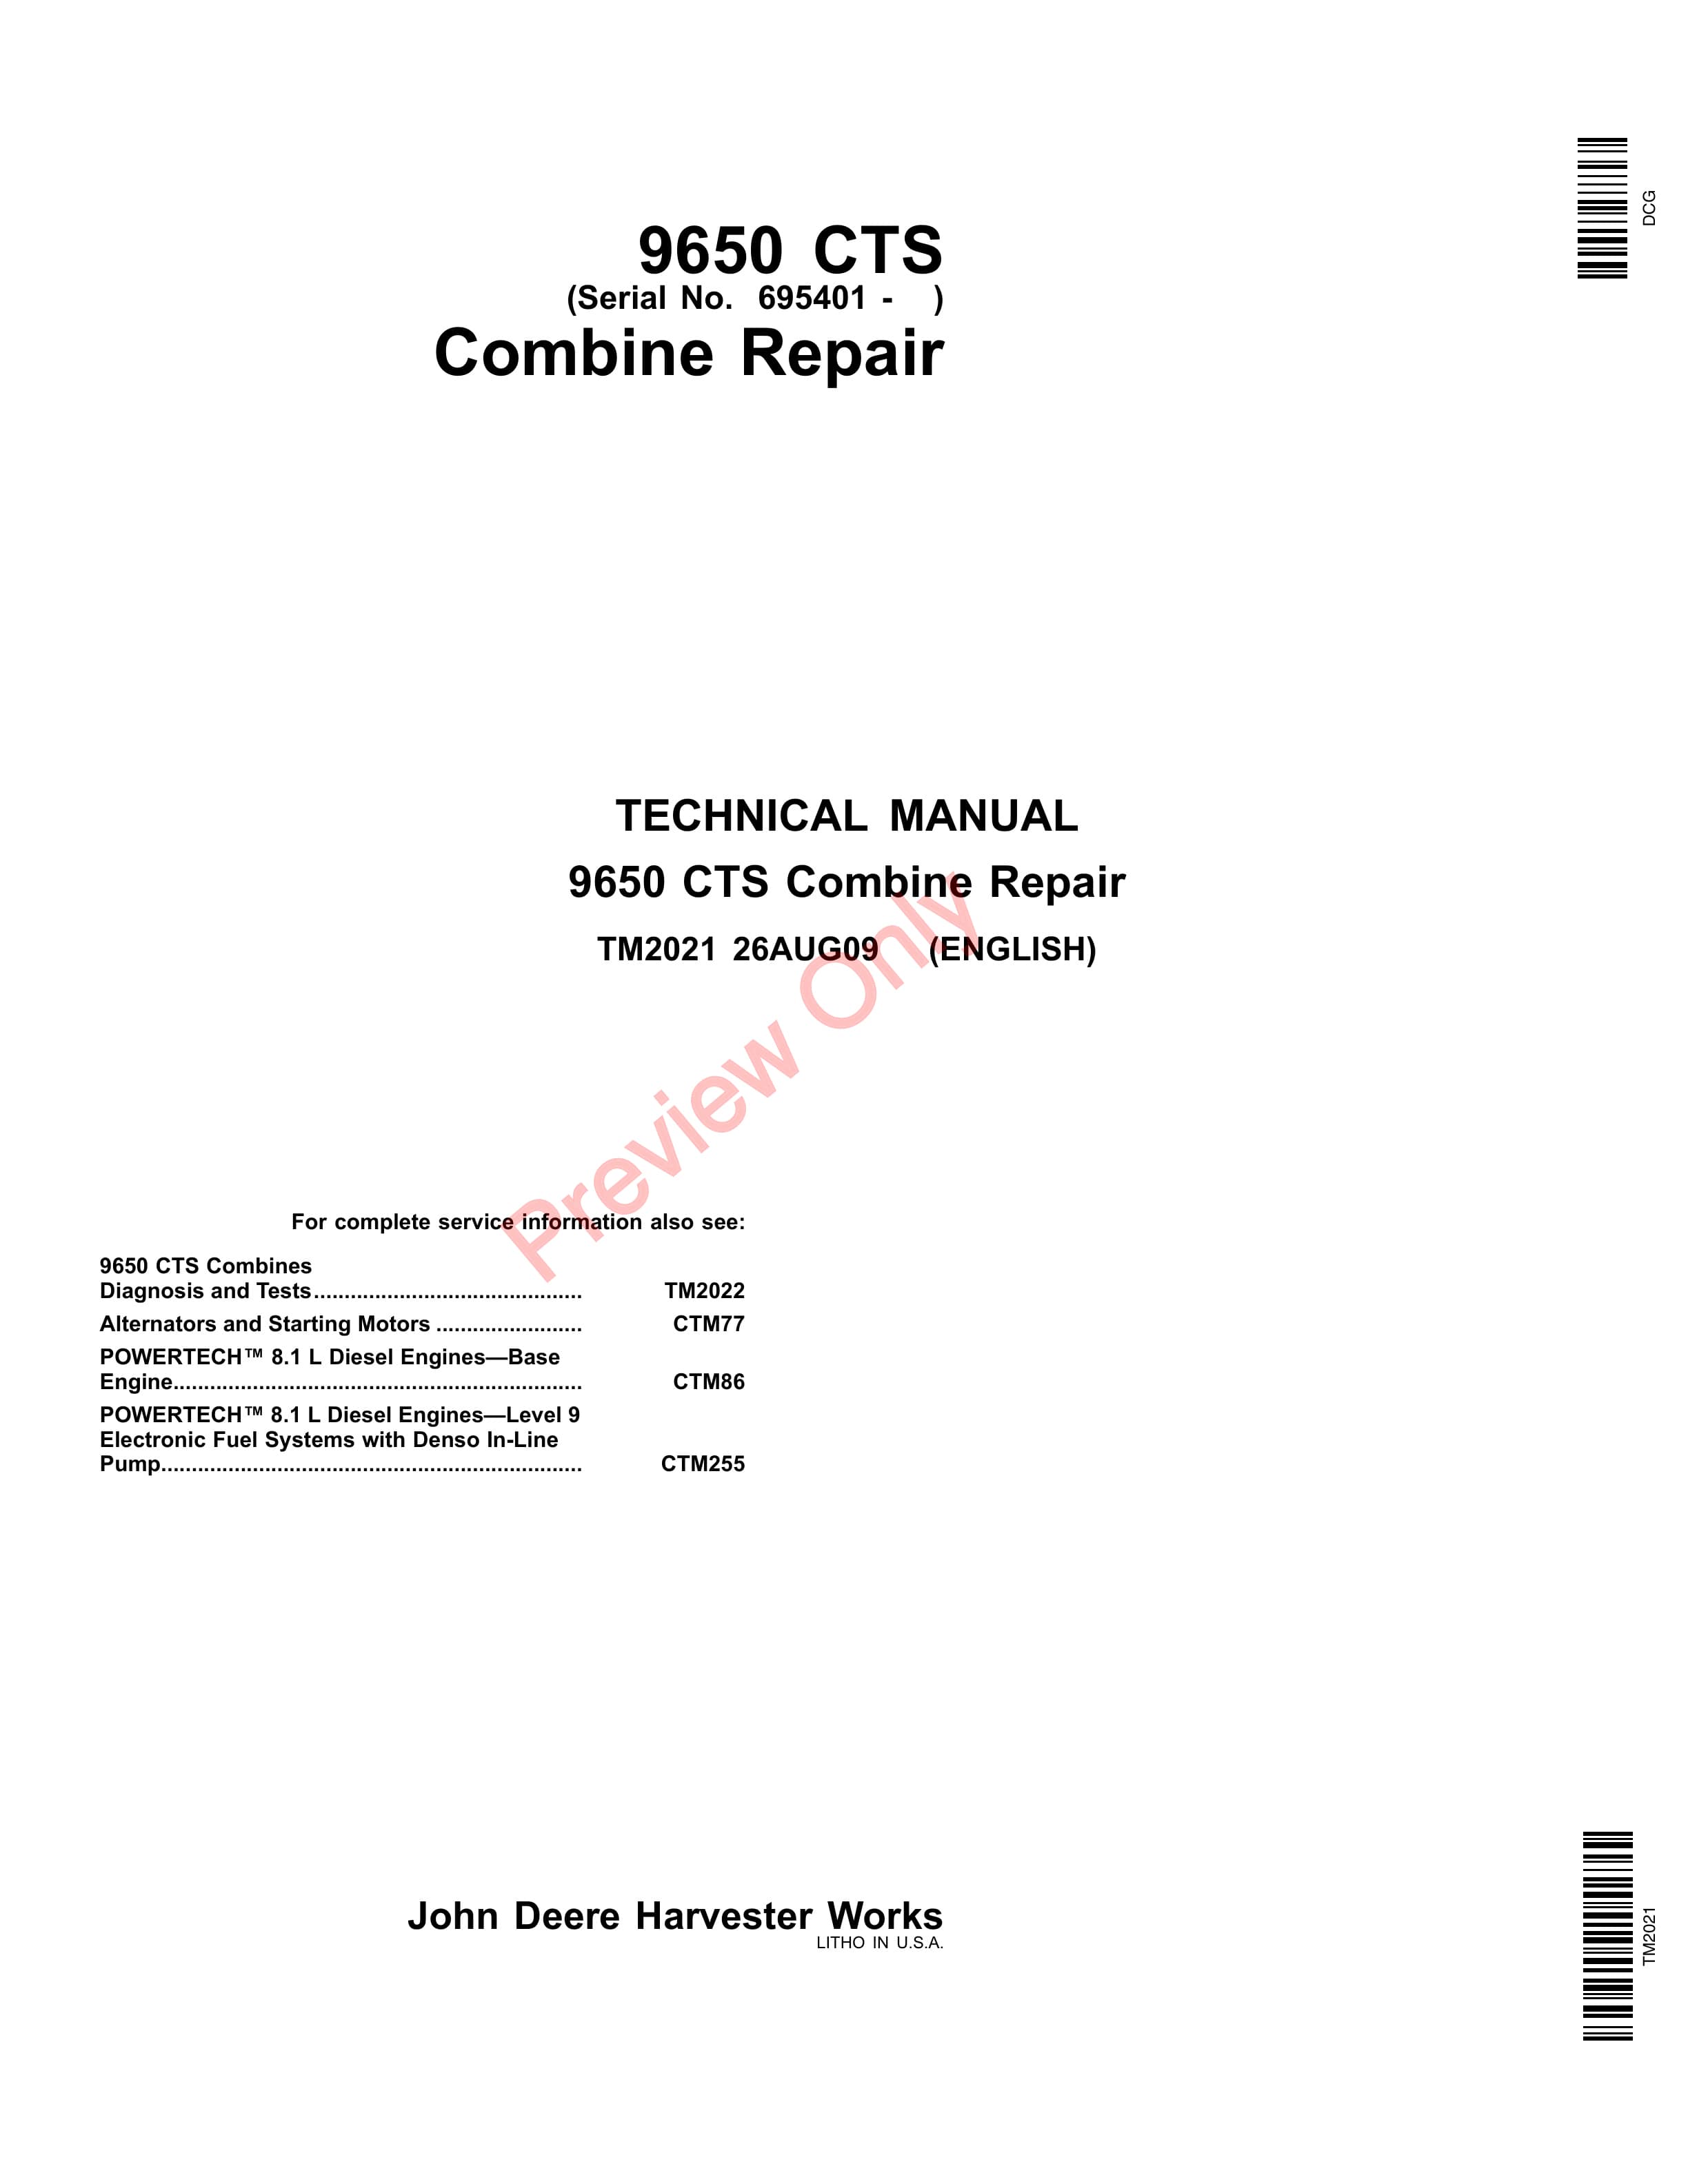 John Deere 9650 CTS Combine Technical Manual TM2021 26AUG09 1